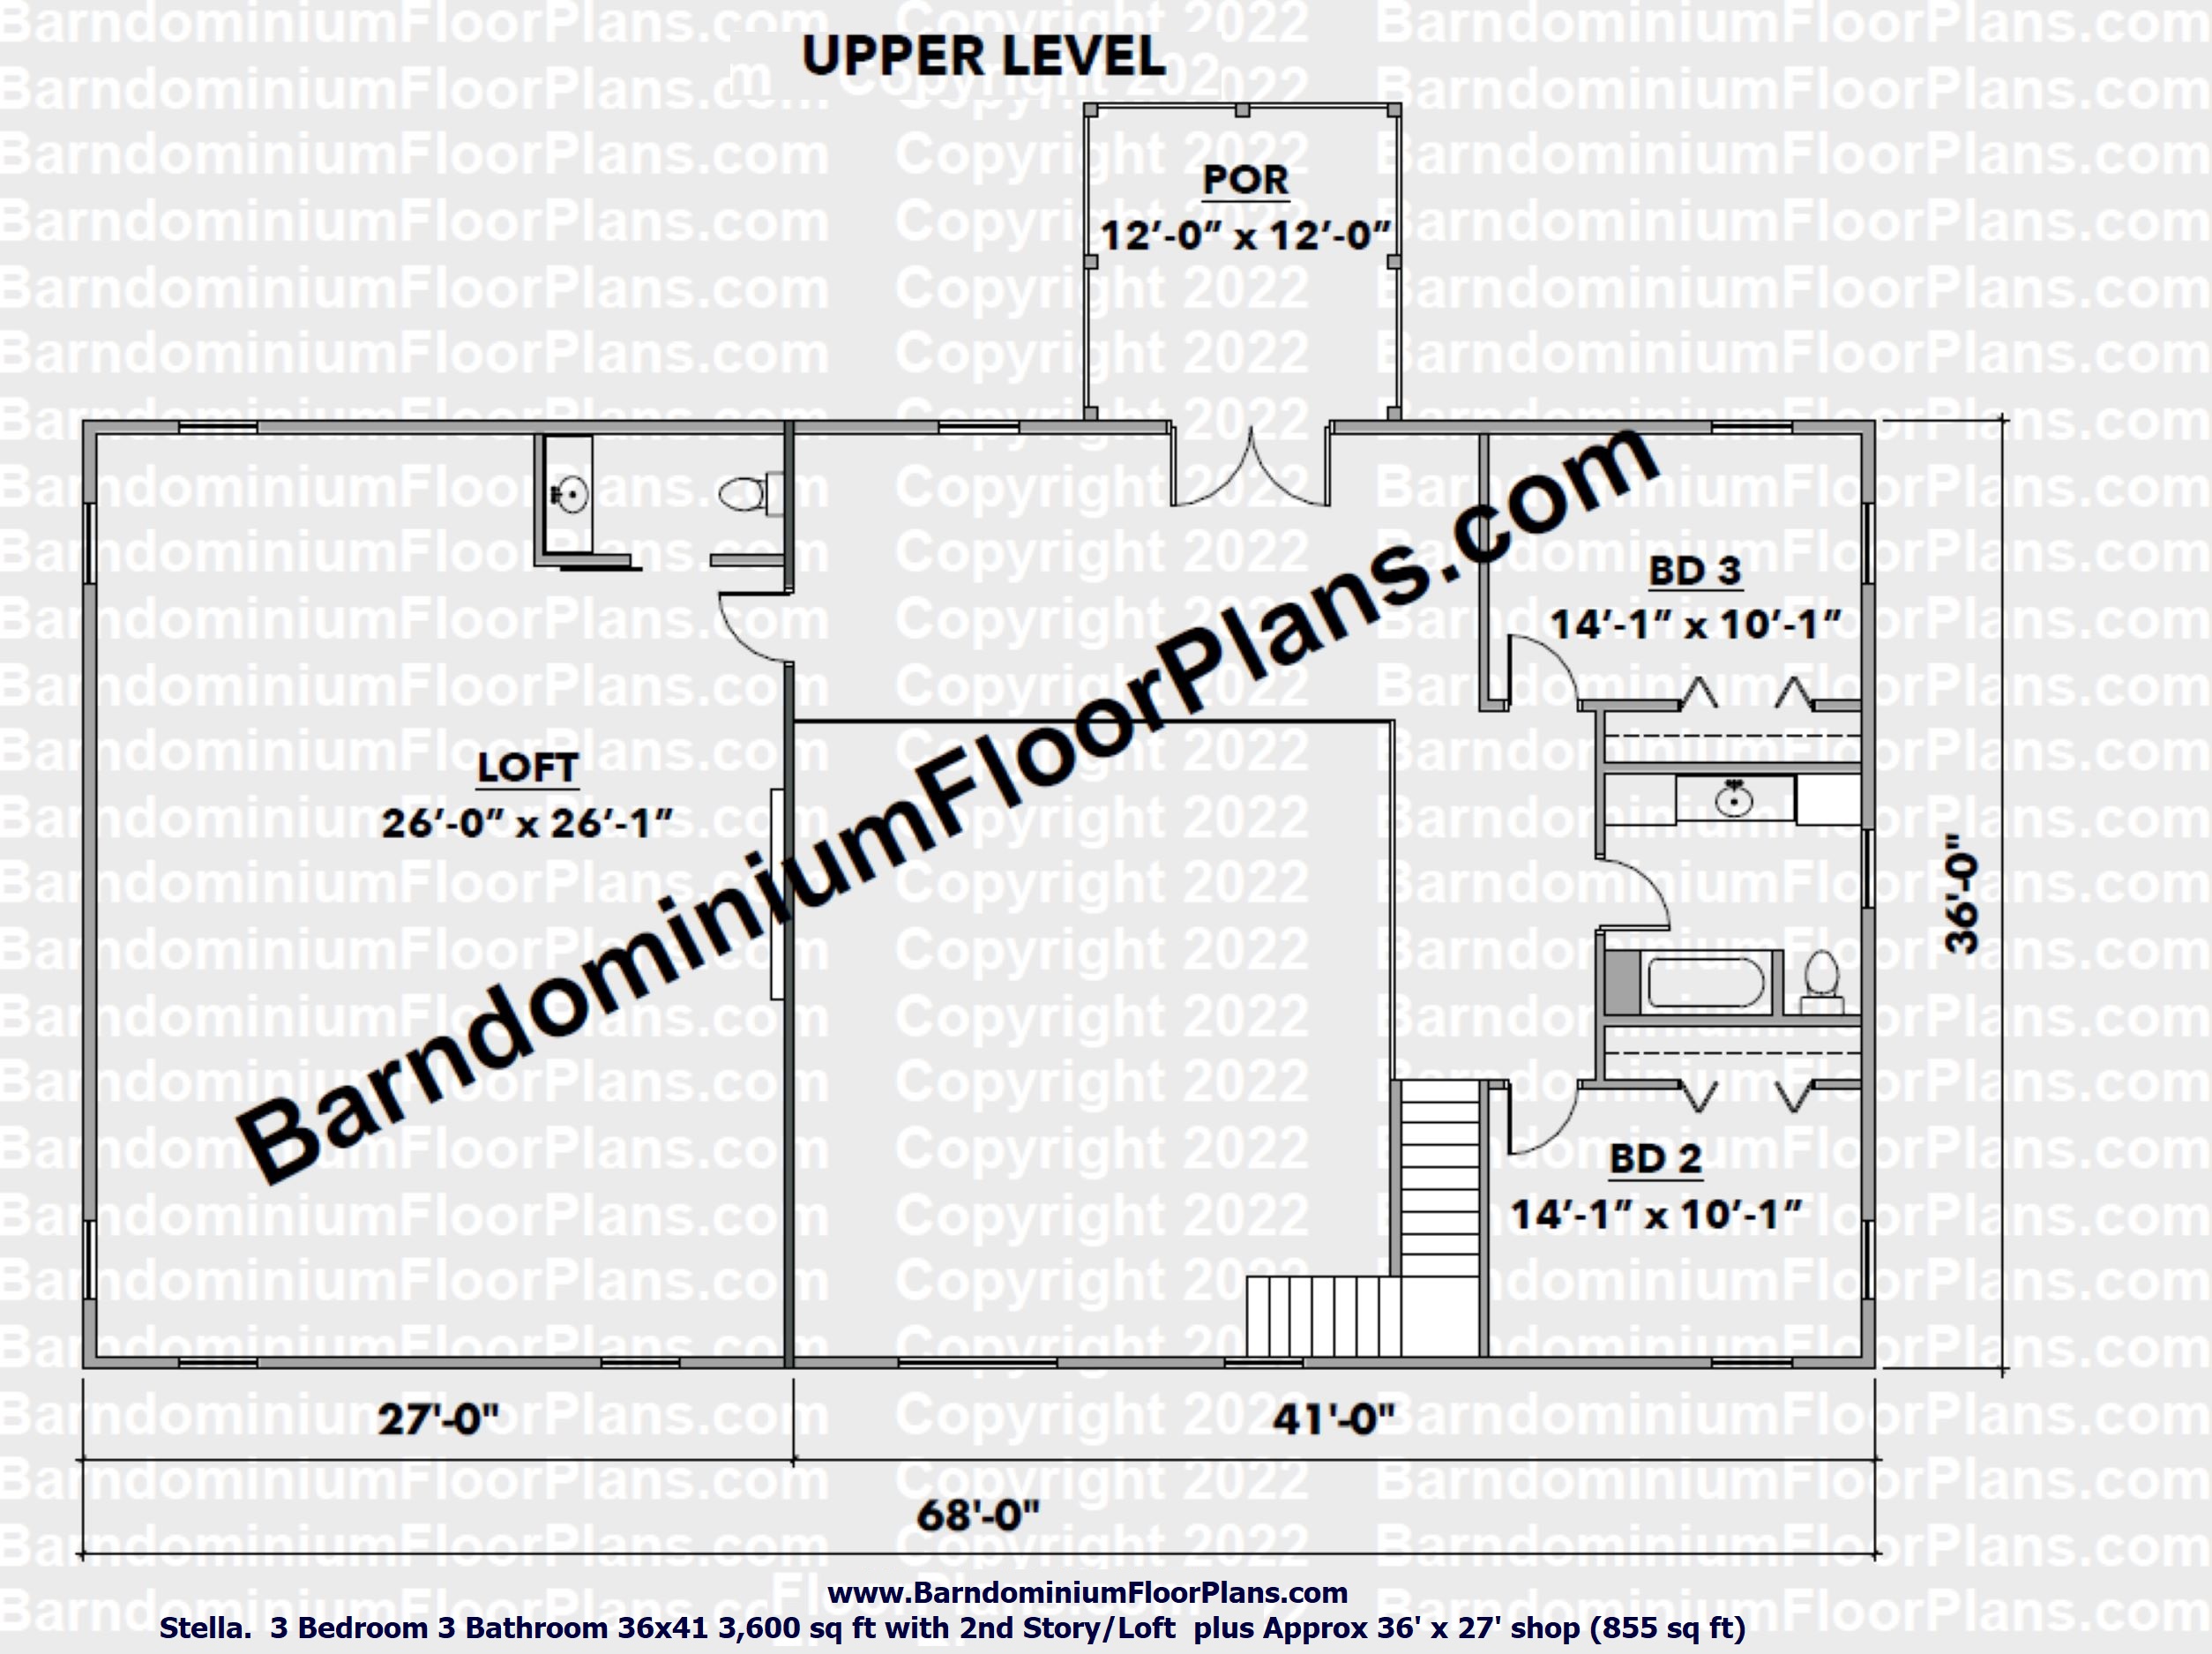 stella-barndominium-upper-level-floor-plan-3641-3BD-4BA-barndominiumfloorplans.com